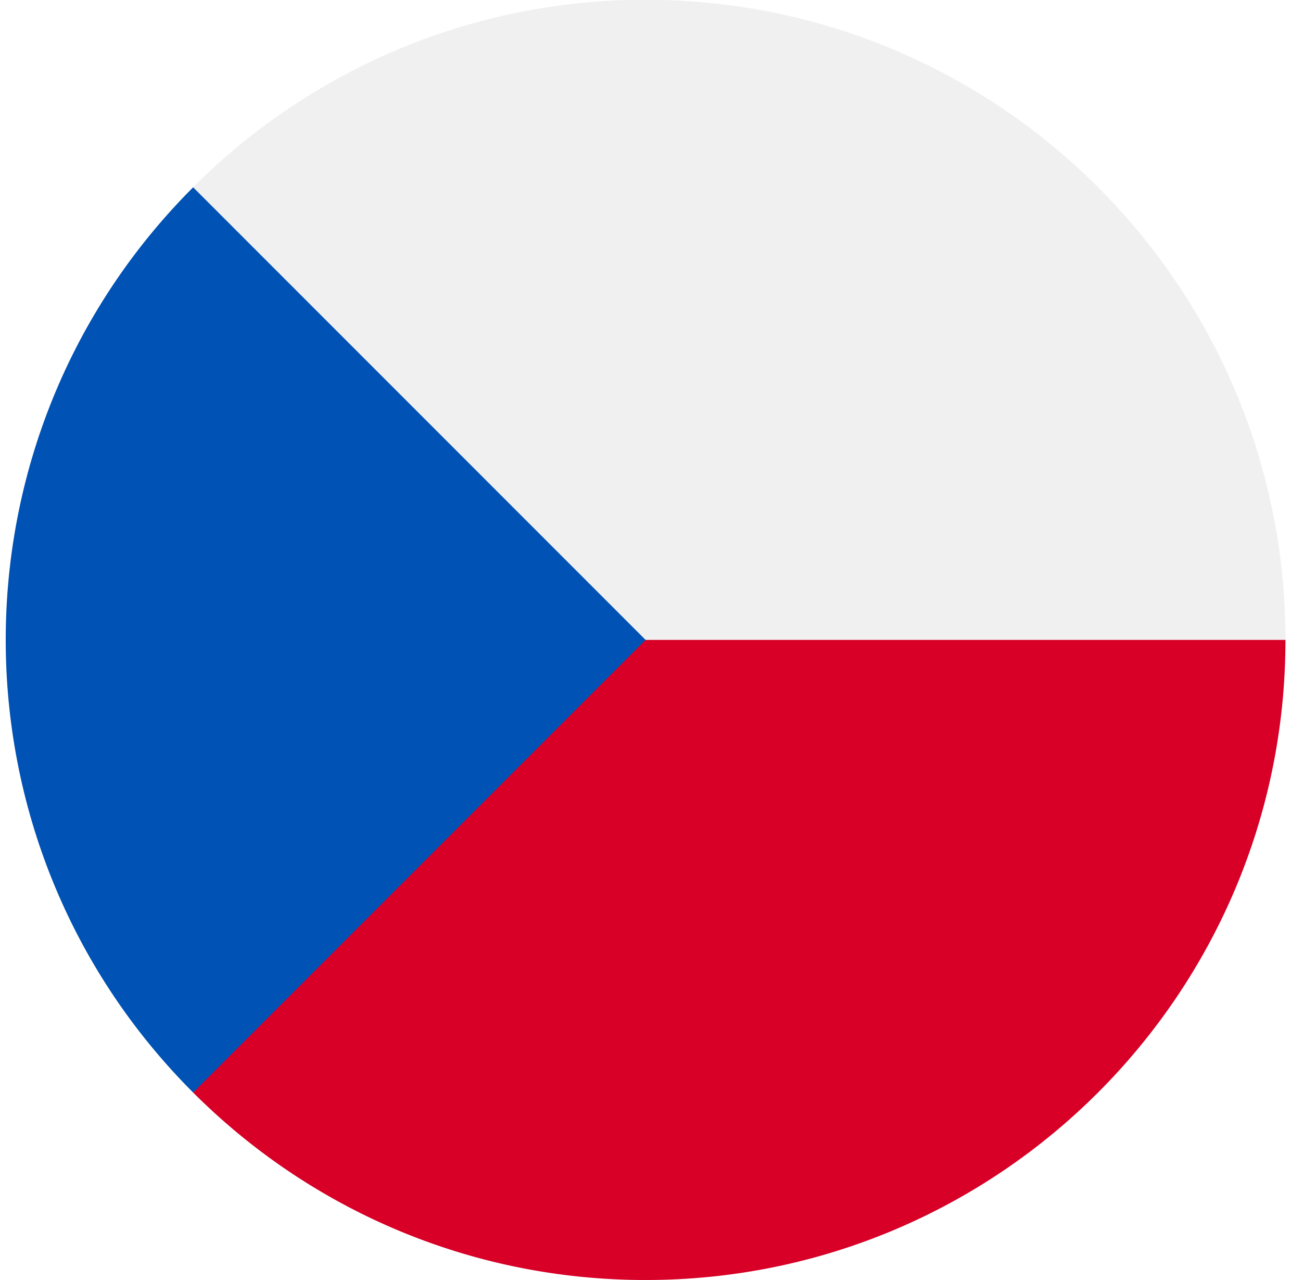 Czech flag image